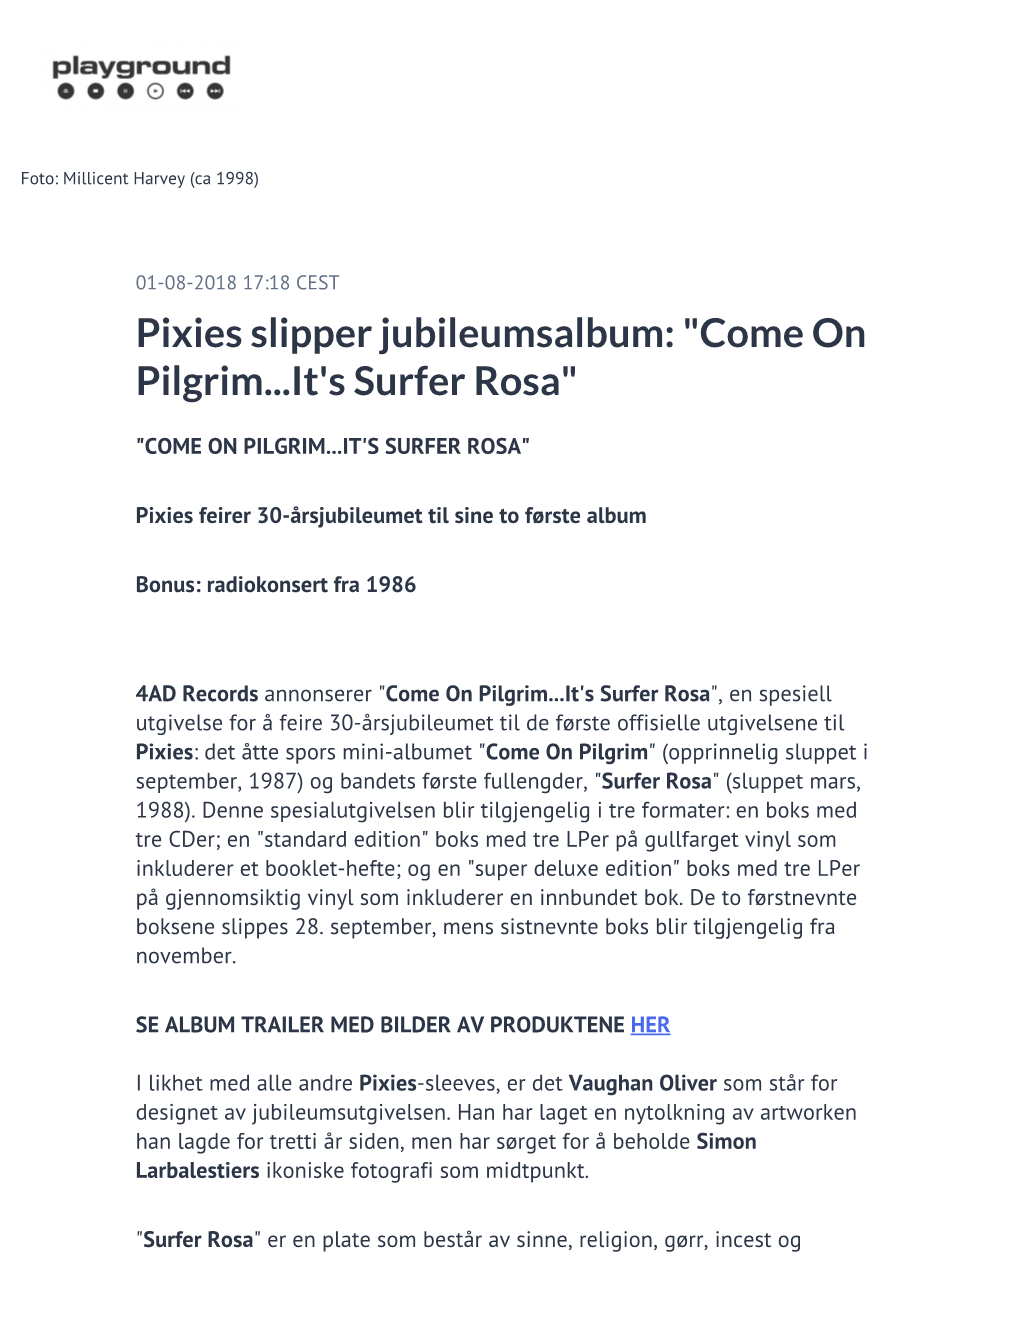 Pixies Slipper Jubileumsalbum: "Come on Pilgrim...It's Surfer Rosa"